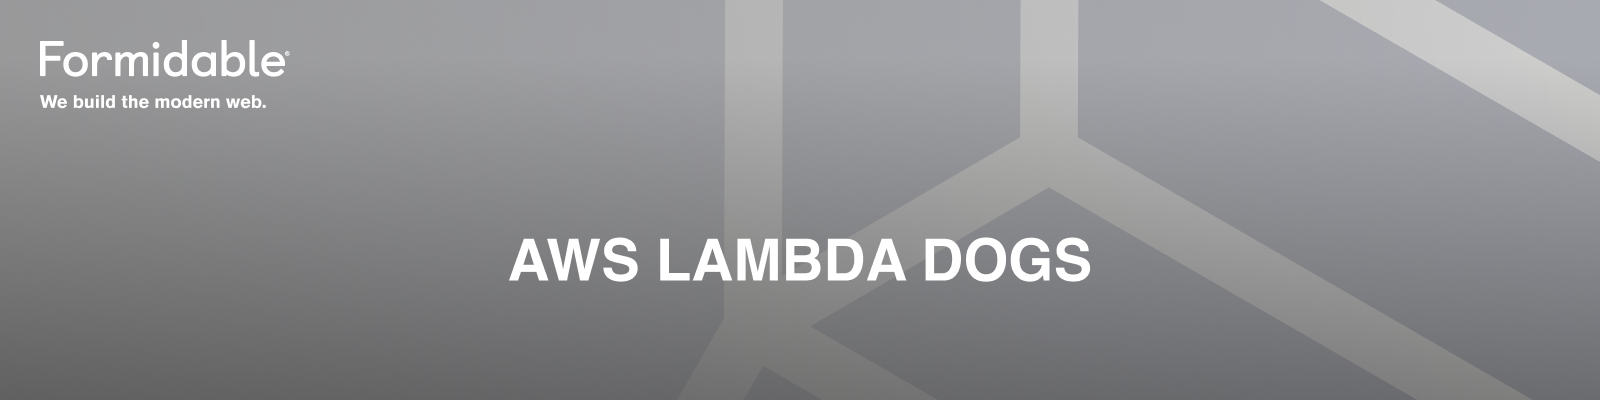 AWS Lambda Dogs REST API — Formidable, We build the modern web